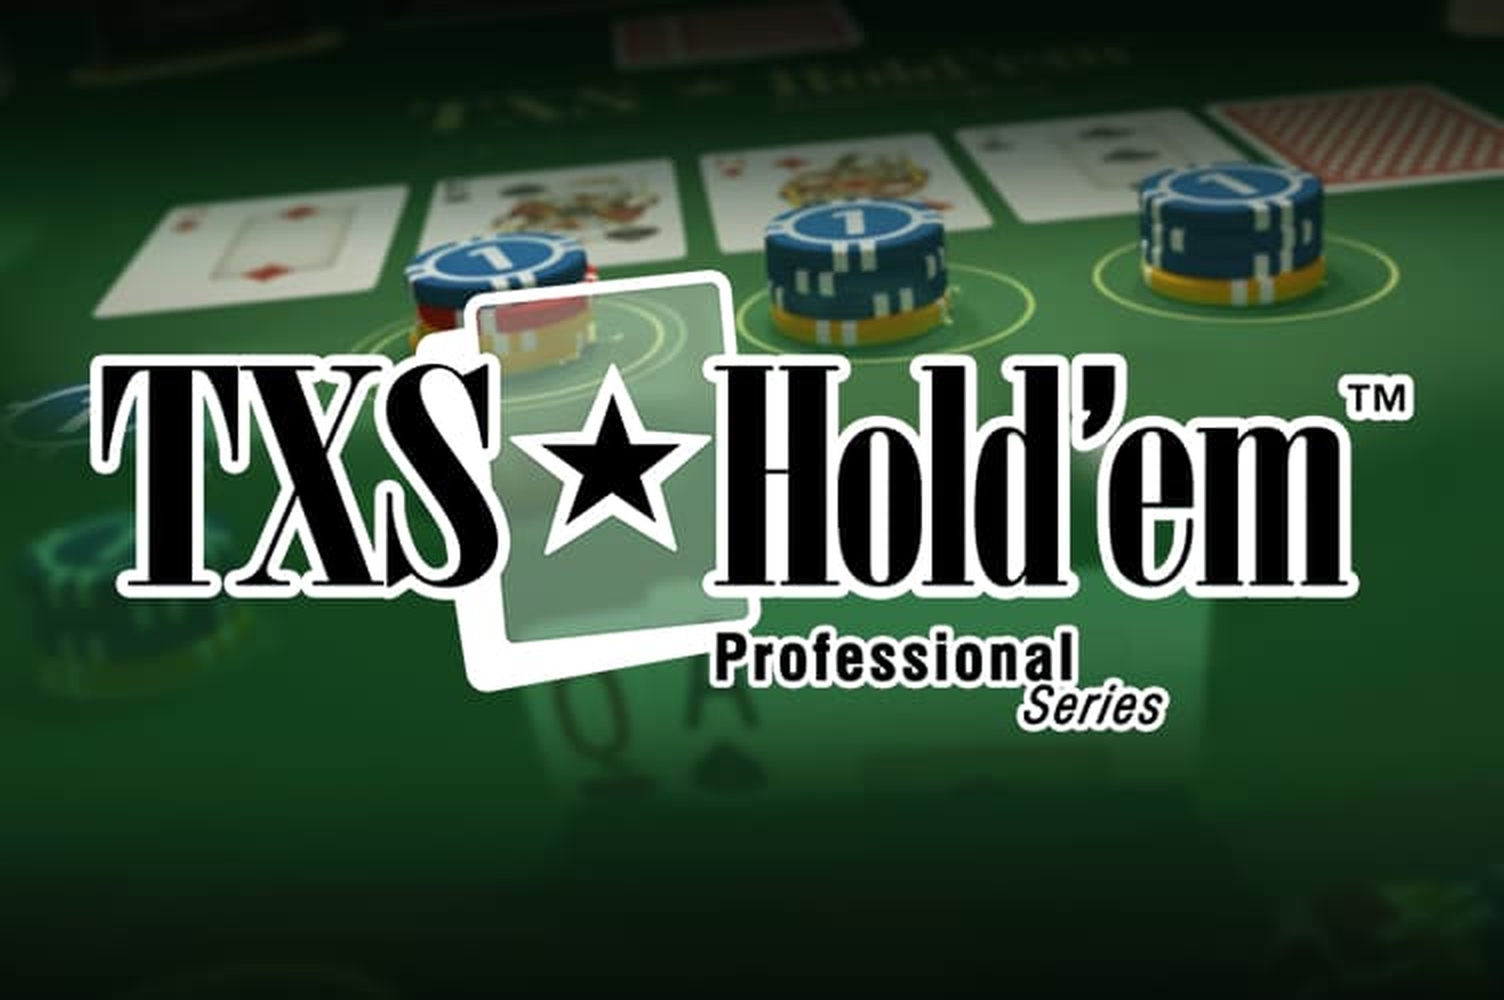 The Texas Hold'em Bonus Online Slot Demo Game by Felt